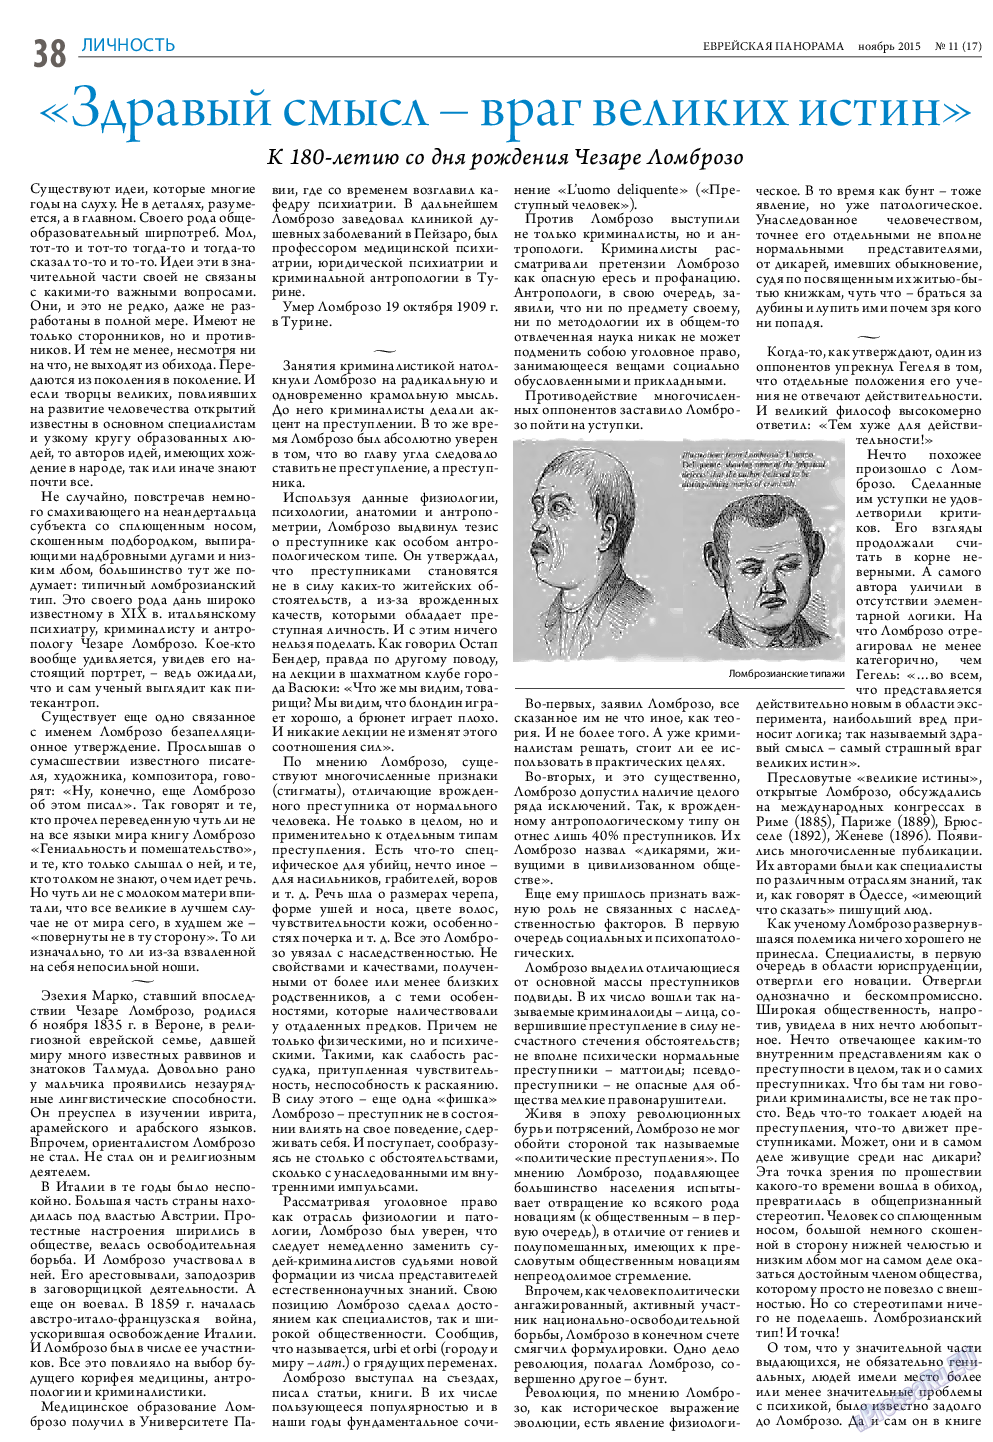 Еврейская панорама, газета. 2015 №11 стр.38